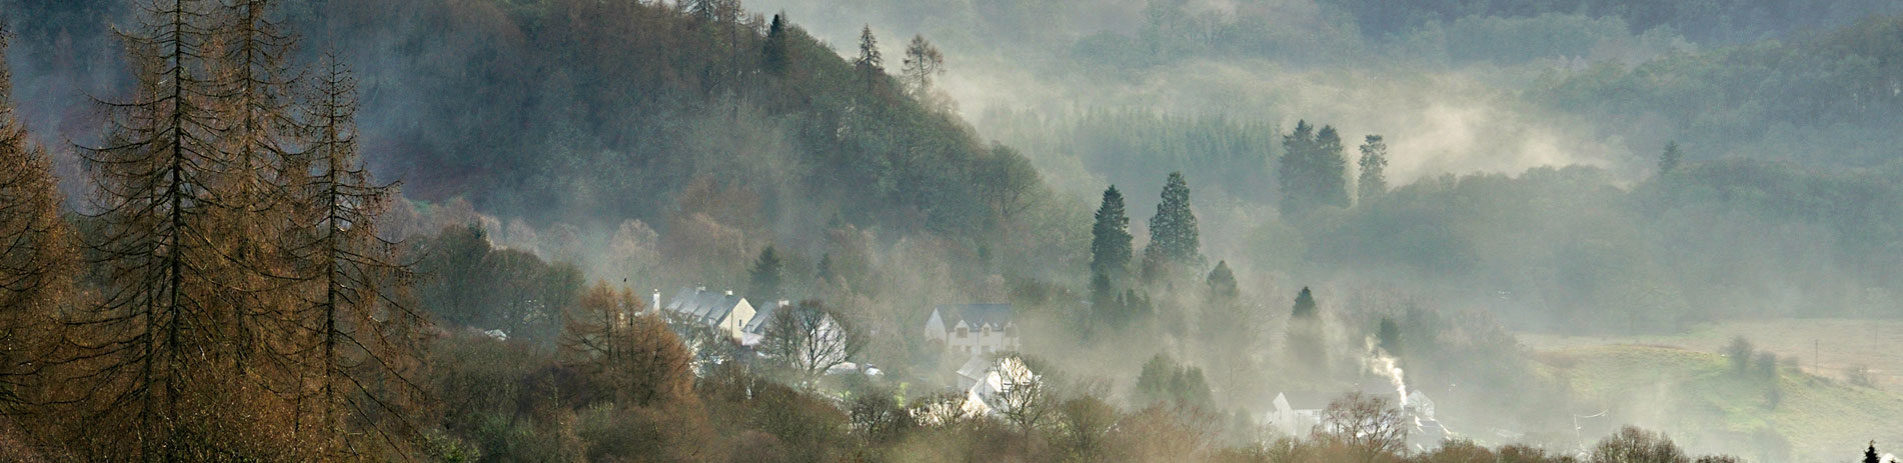 mist-over-aberfoyle-village-and-dense-woods-surrounding-landscape